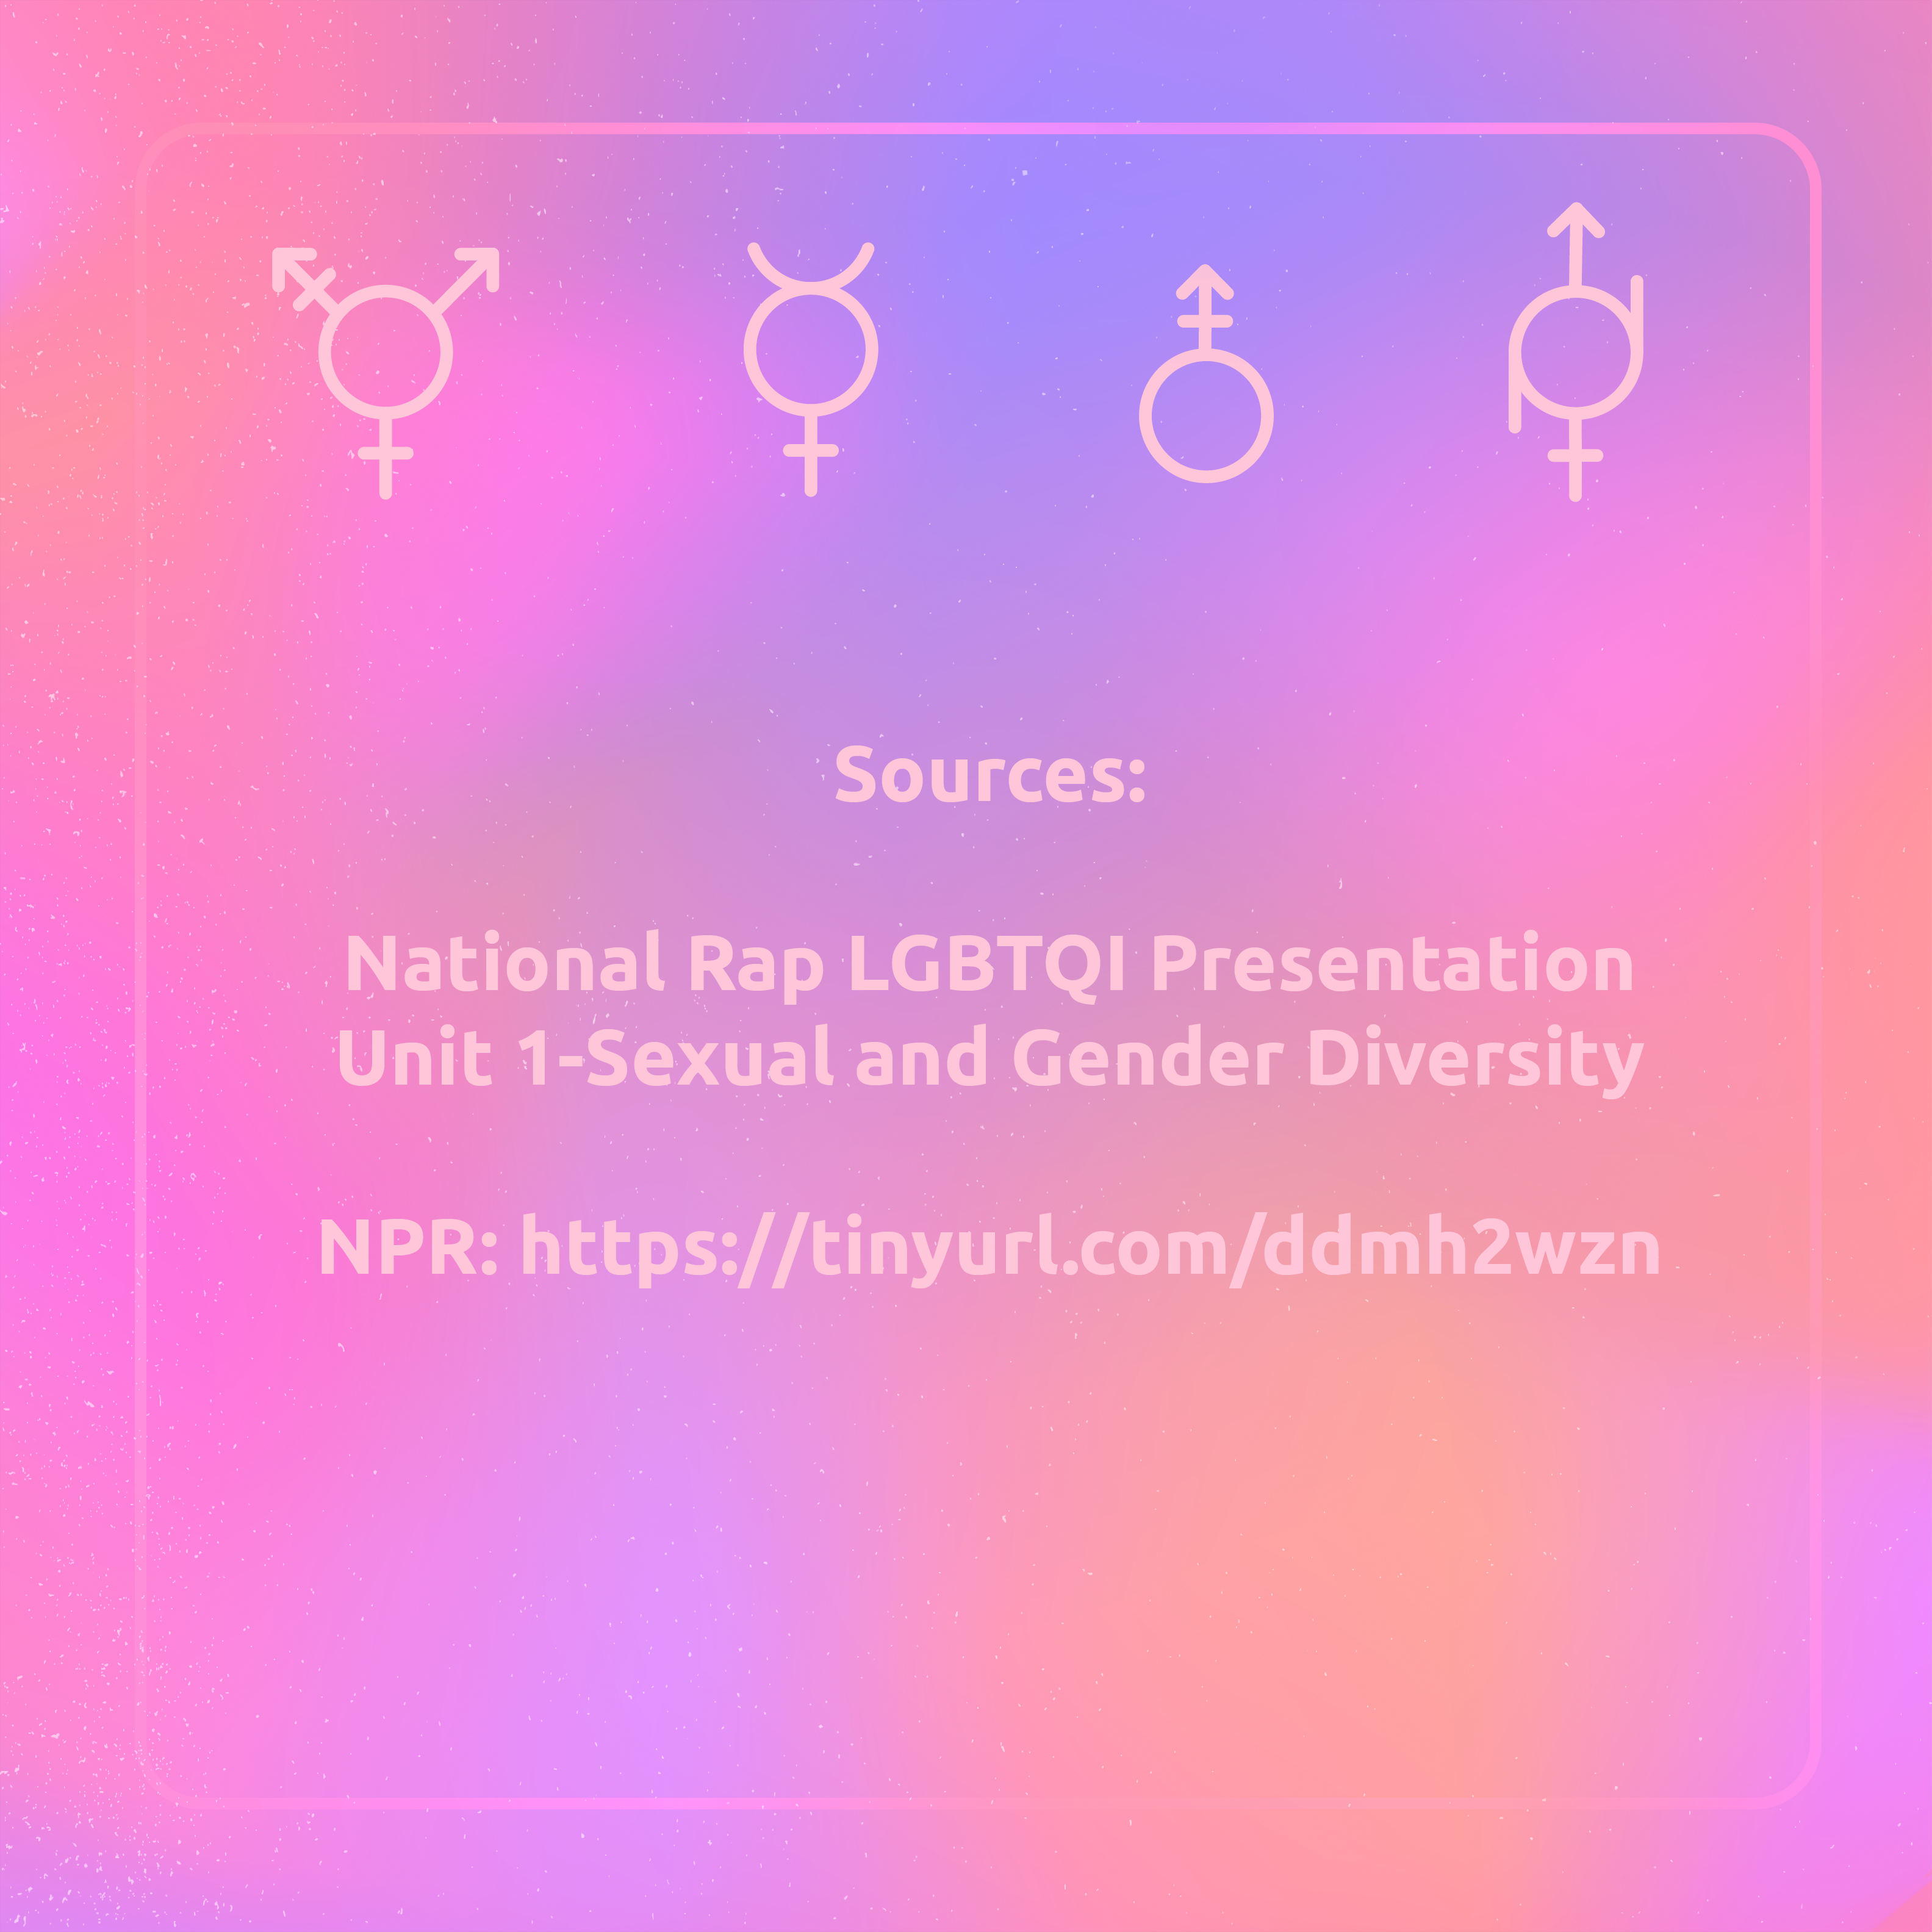 Sources: National Rap LGBTQI Presentation Unit 1 and NPR